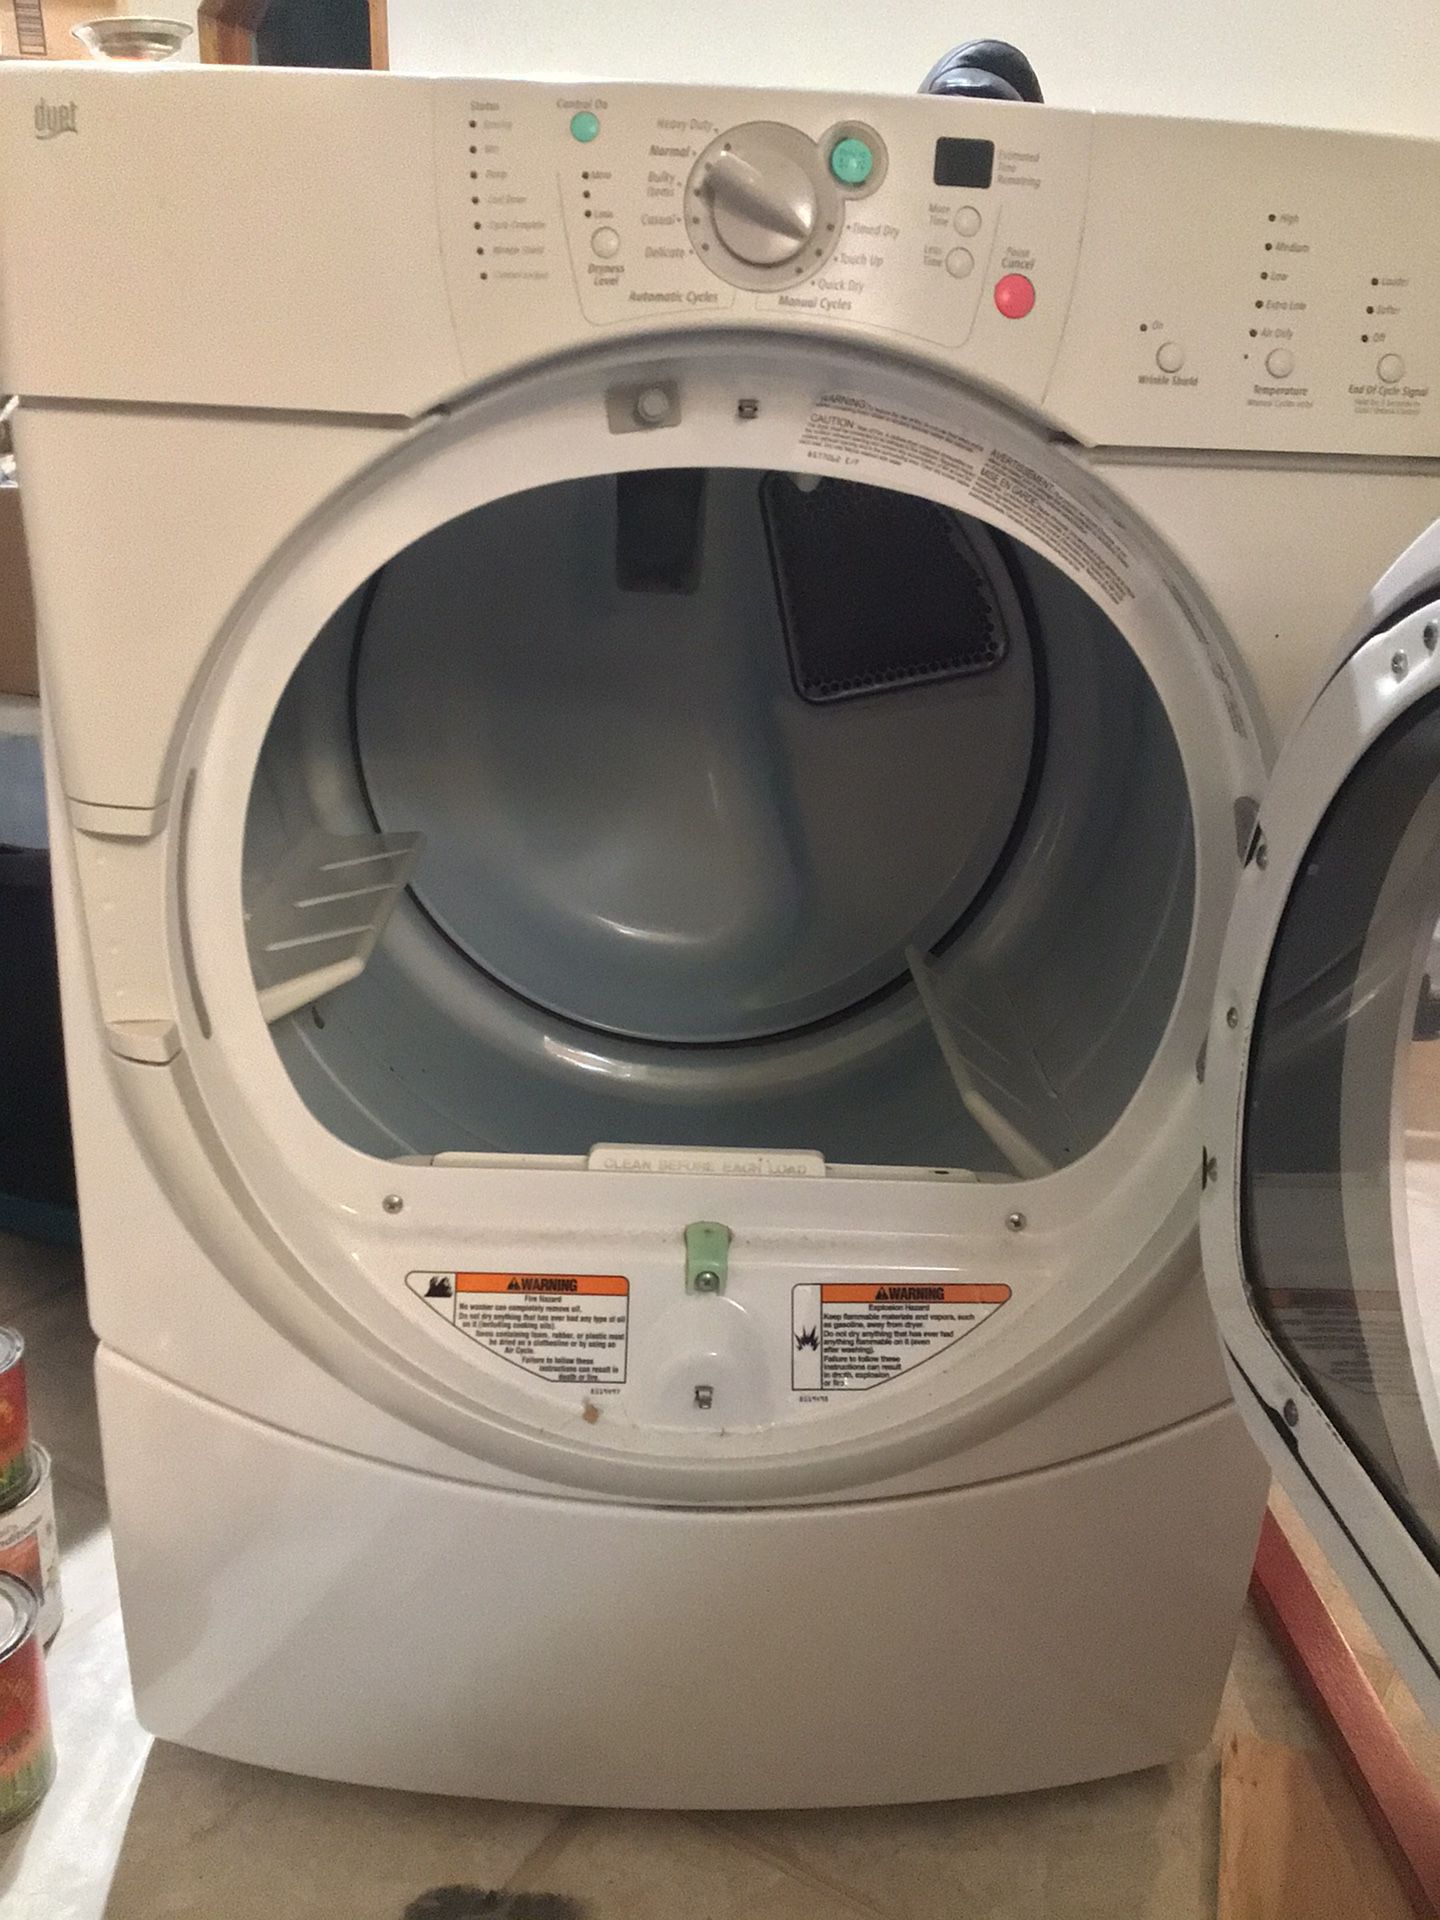 Whirlpool Duet Electric Dryer